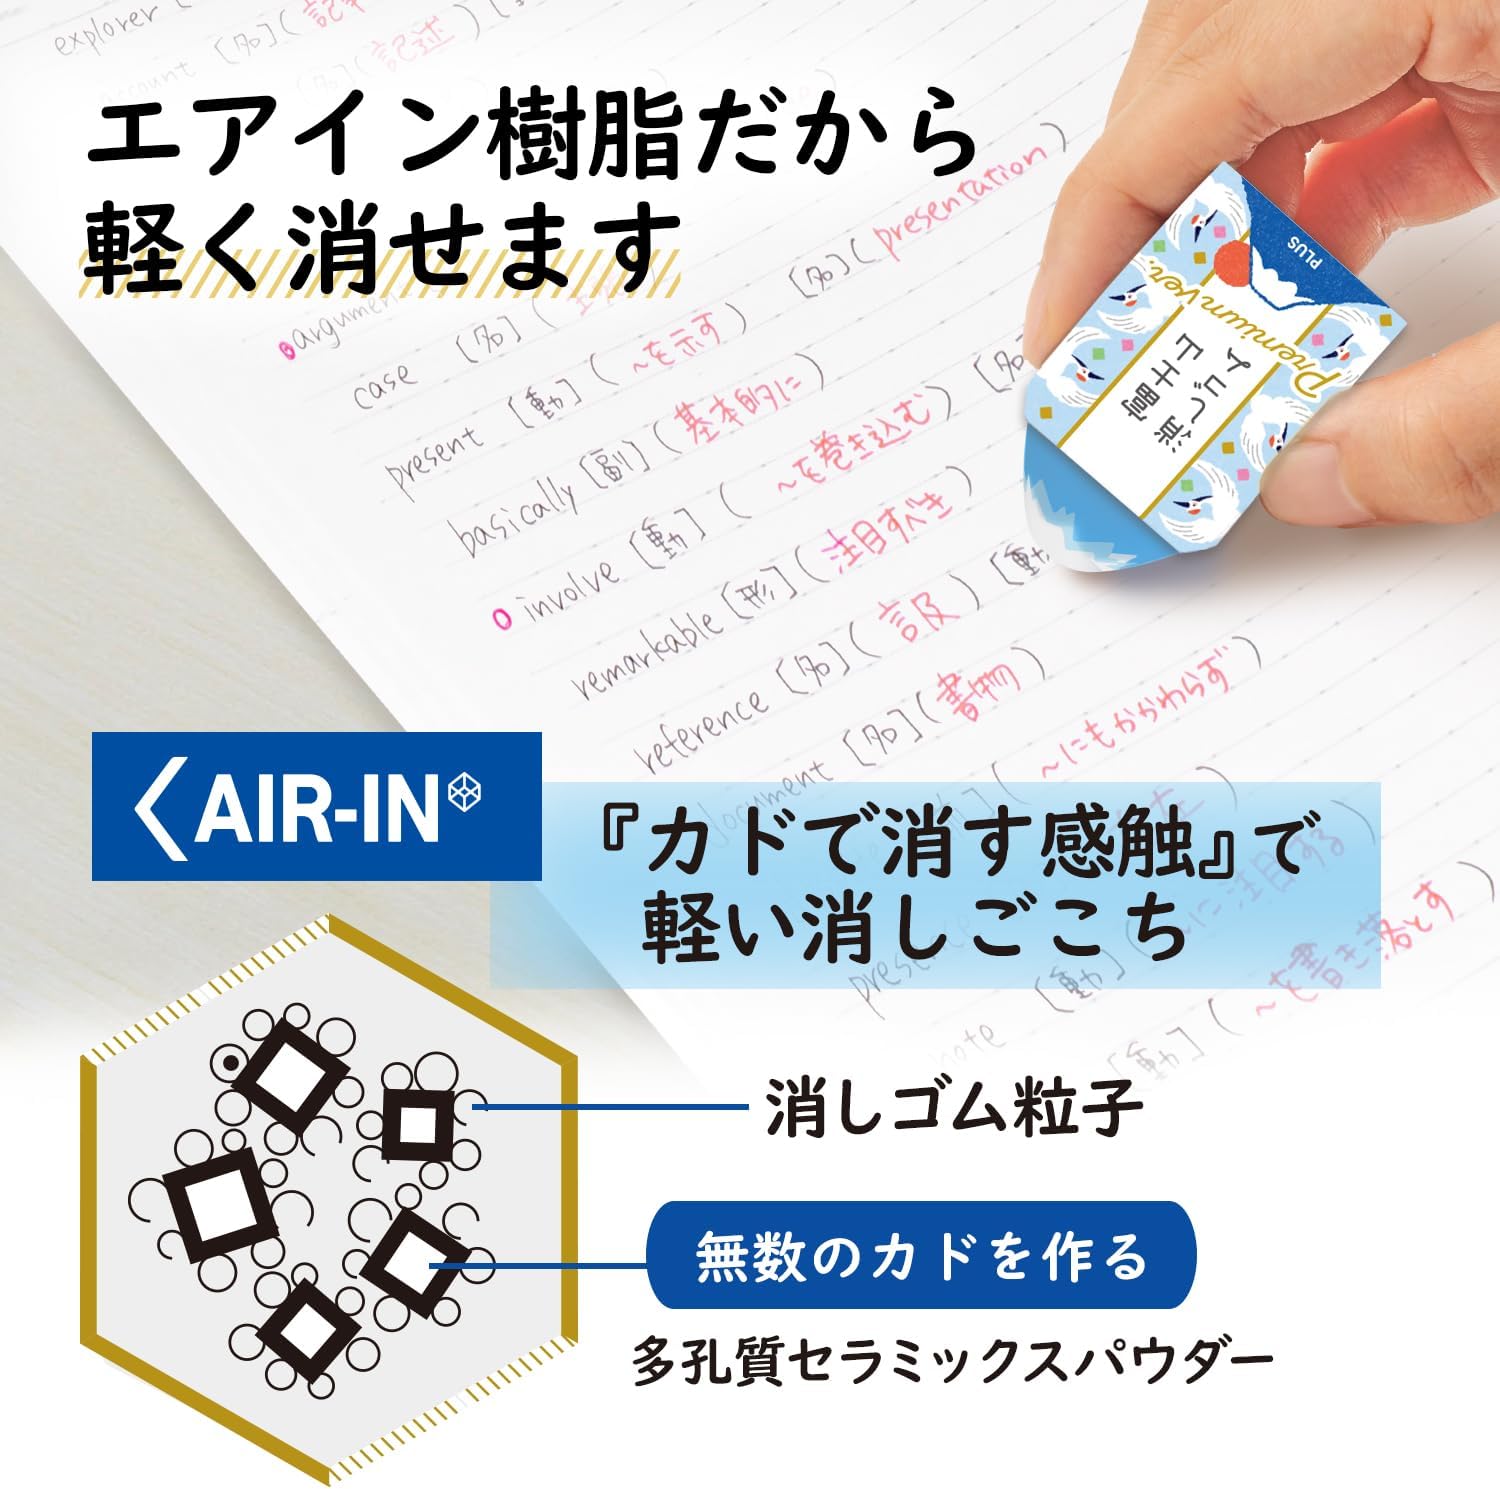 Plus Mt. Fuji Eraser Good Luck Premium Version (Limited Edition) - Wis –  Saiko Stationery